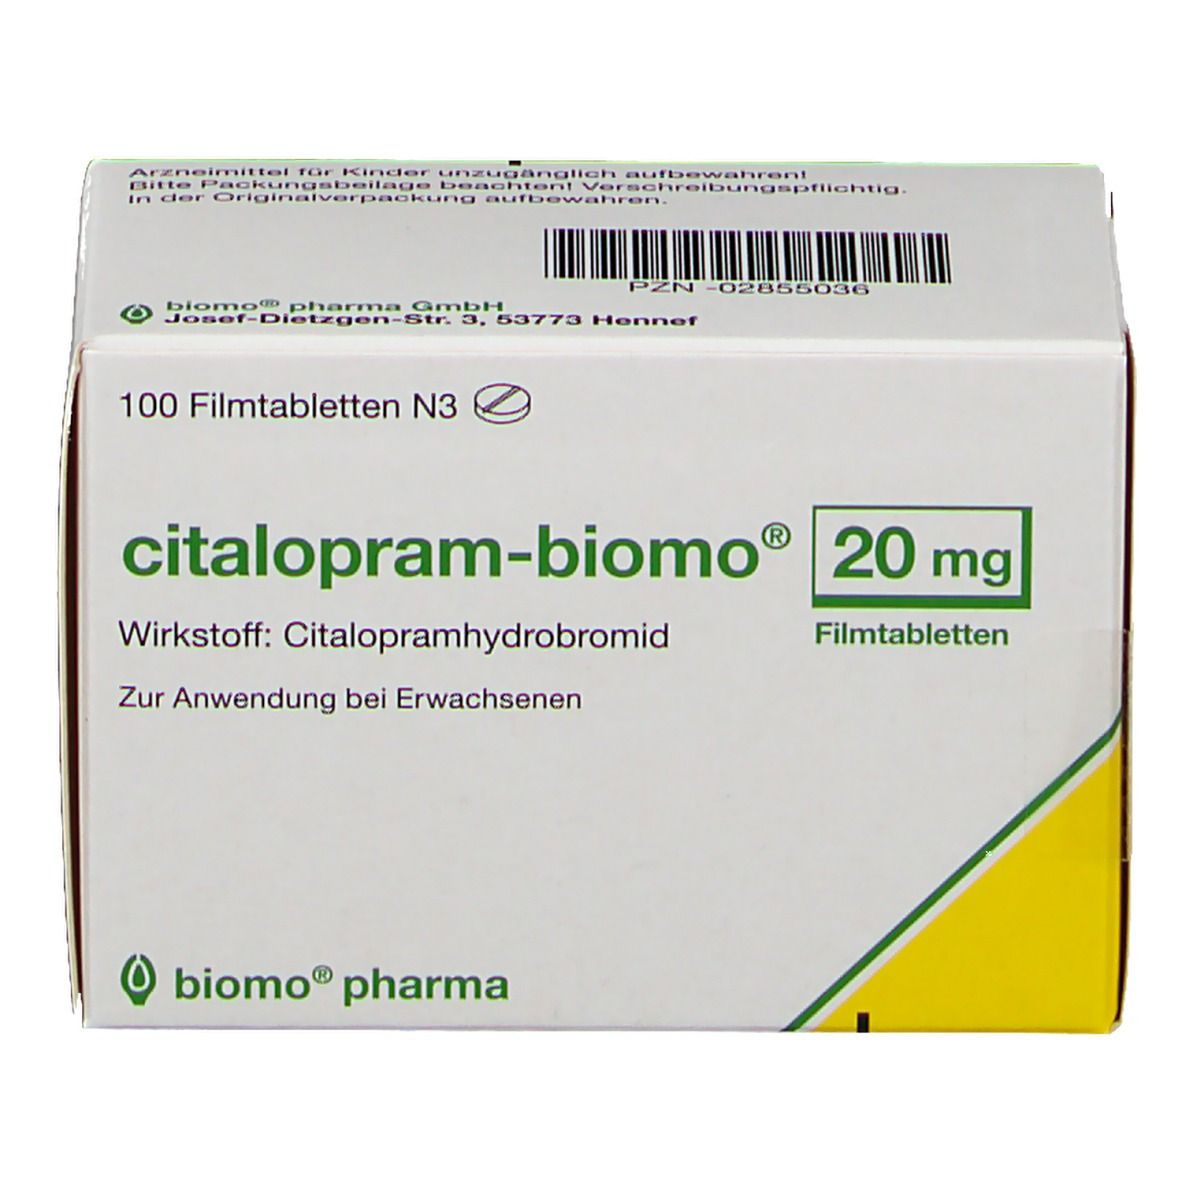 citalopram-biomo® 20 mg